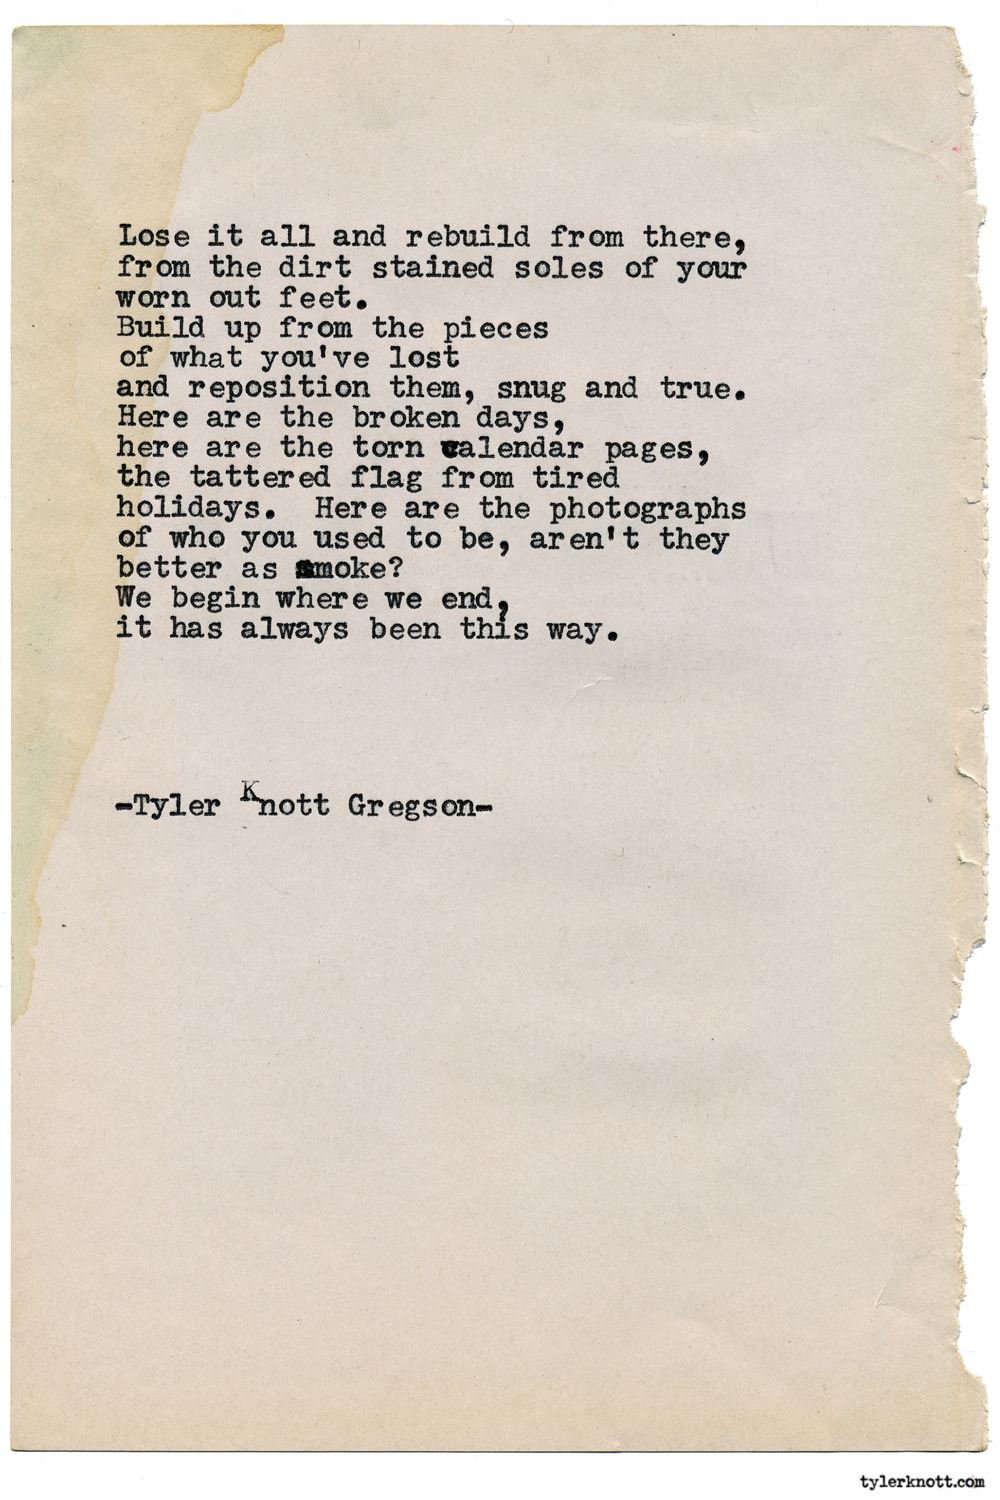 Tyler Knott Gregson — Typewriter Series #1547 by Tyler Knott Gregson...